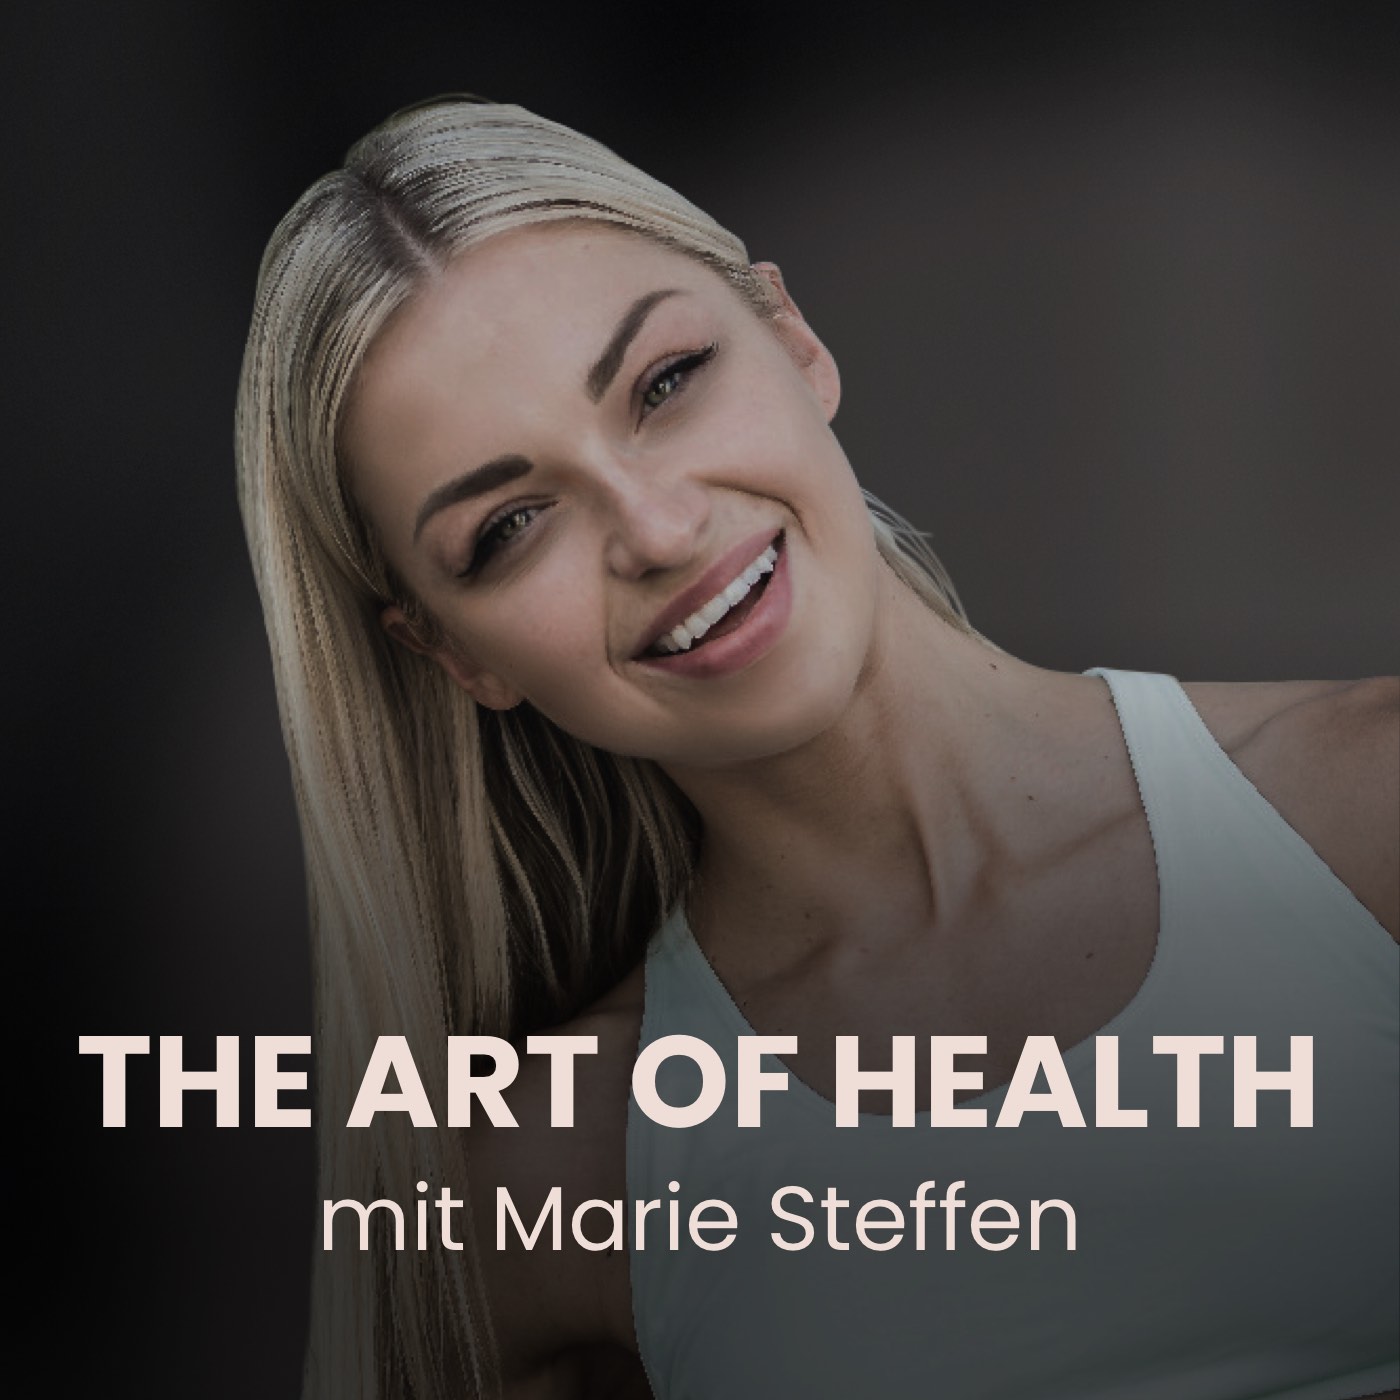 THE ART OF HEALTH